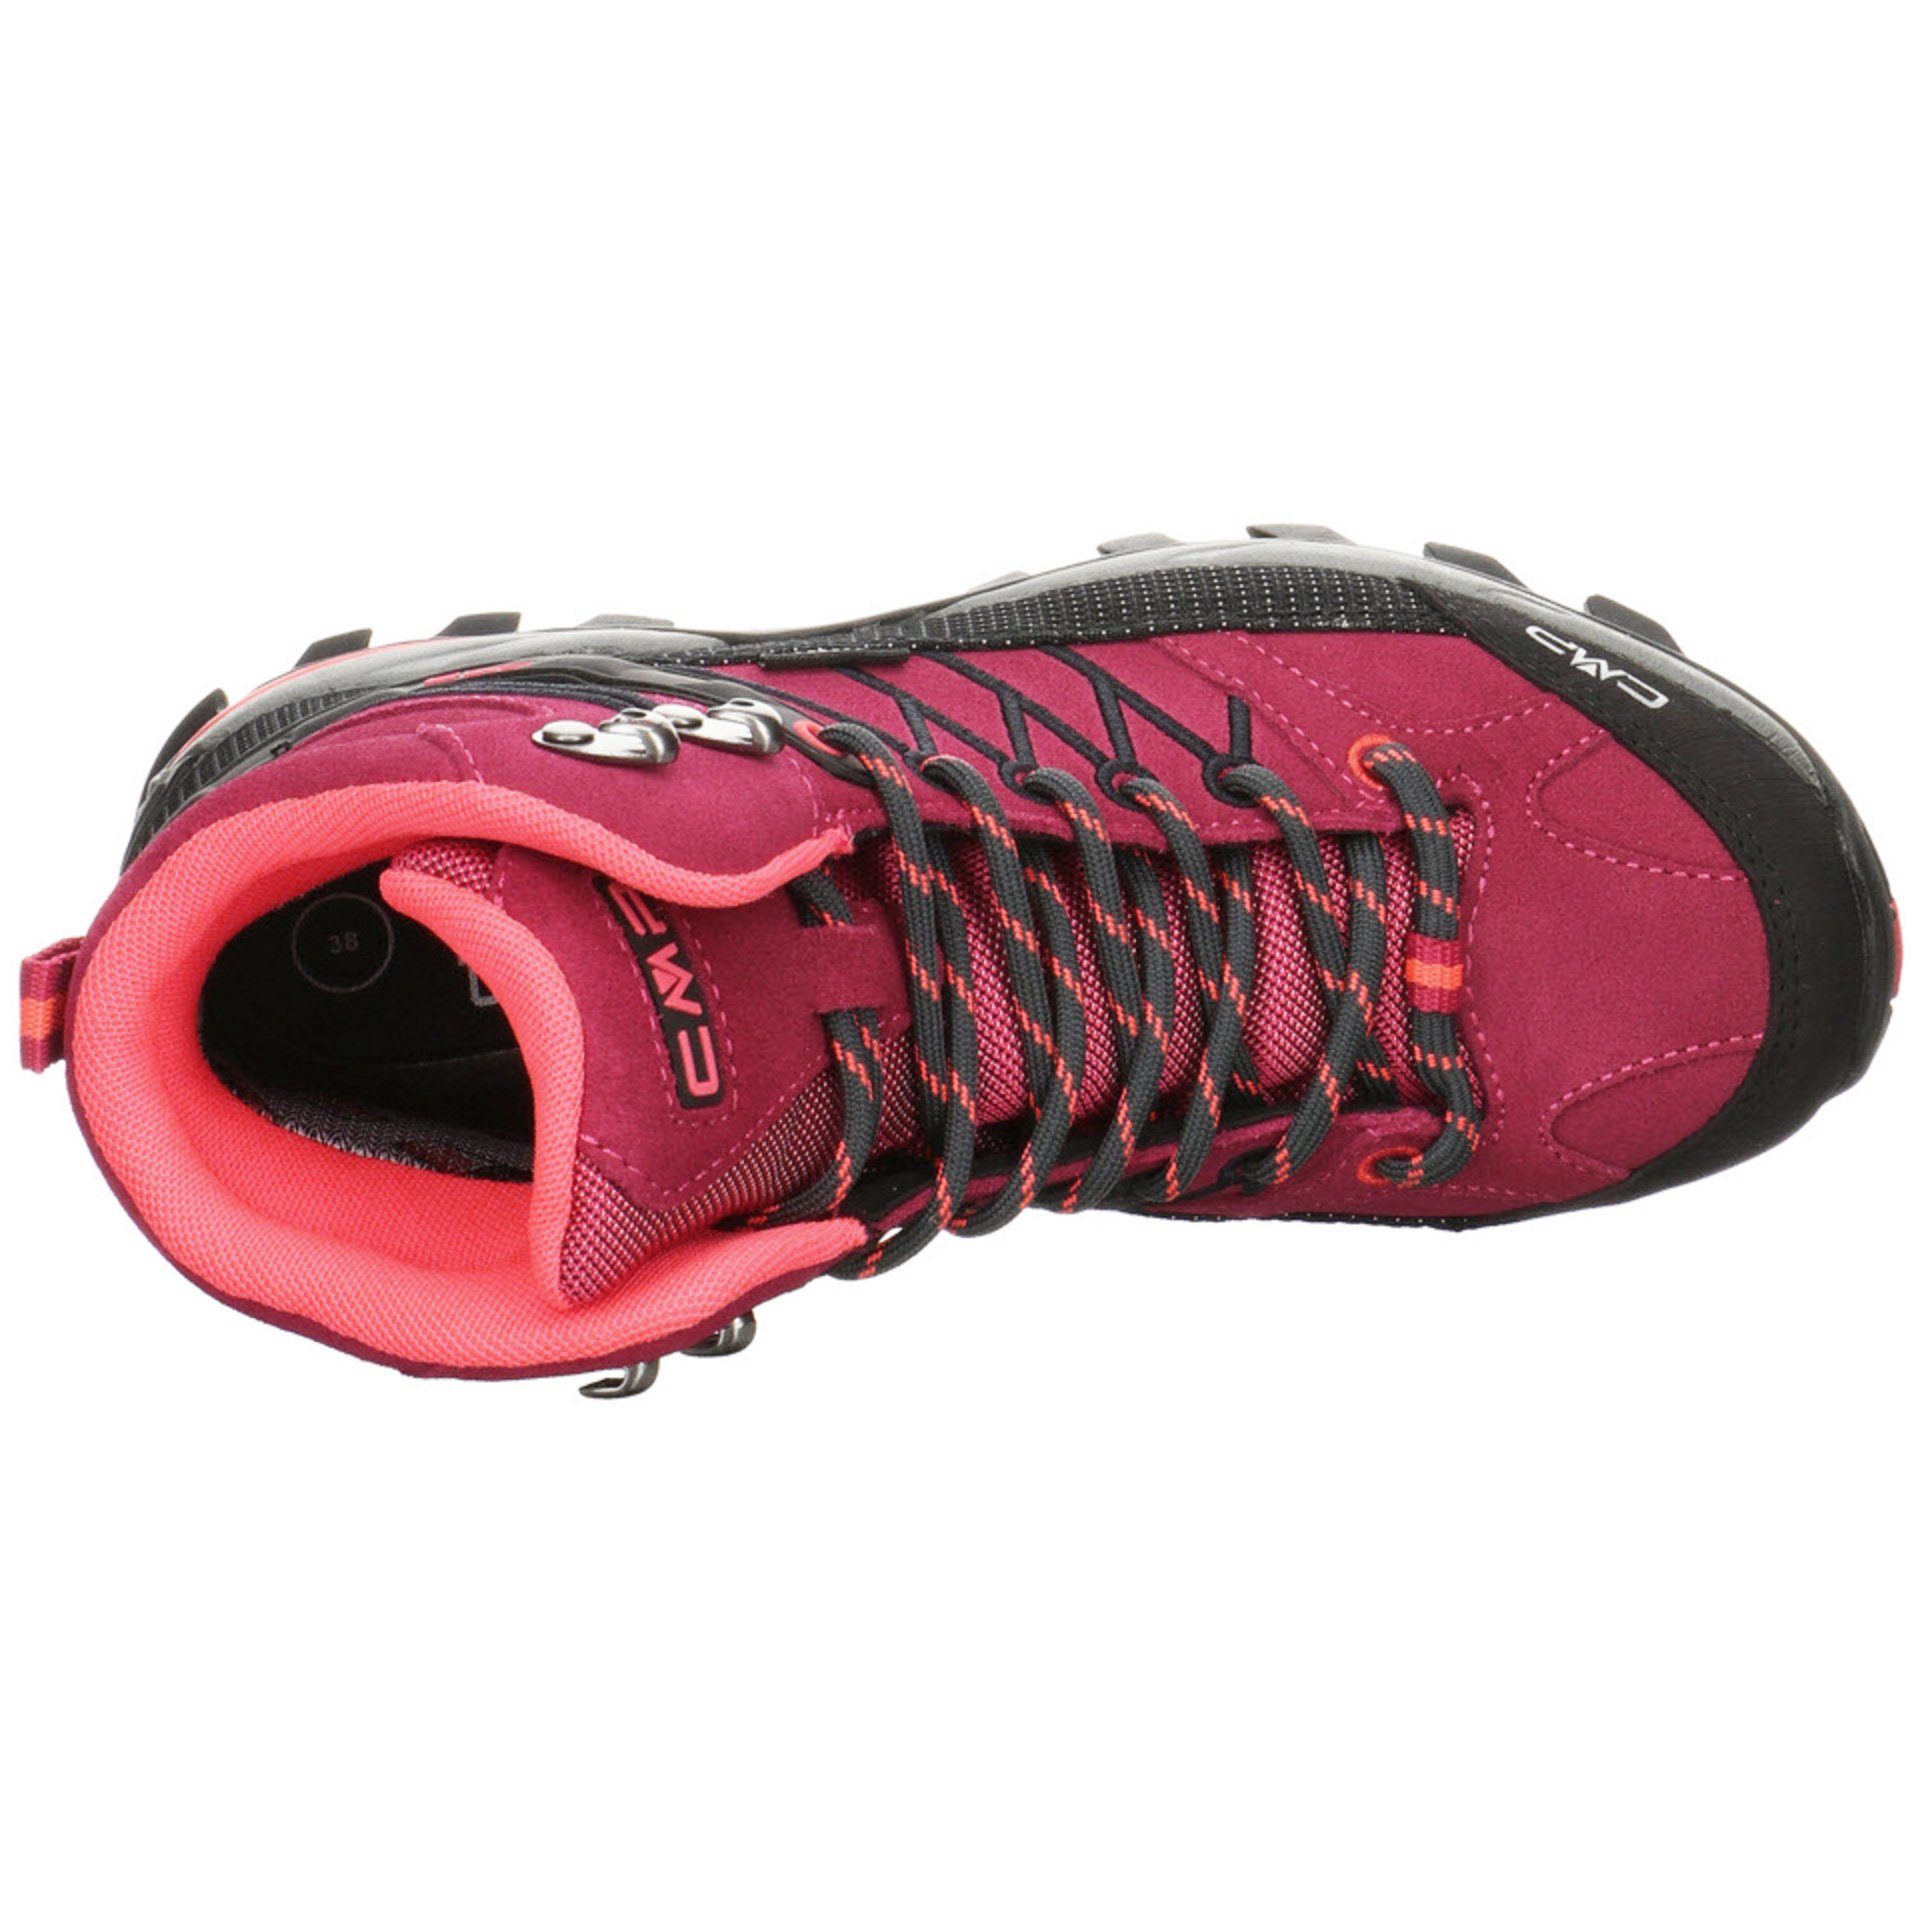 CMP Damen Mid Schuhe Outdoorschuh Outdoorschuh Outdoor Leder-/Textilkombination MAGENTA-ANTRACITE Rigel